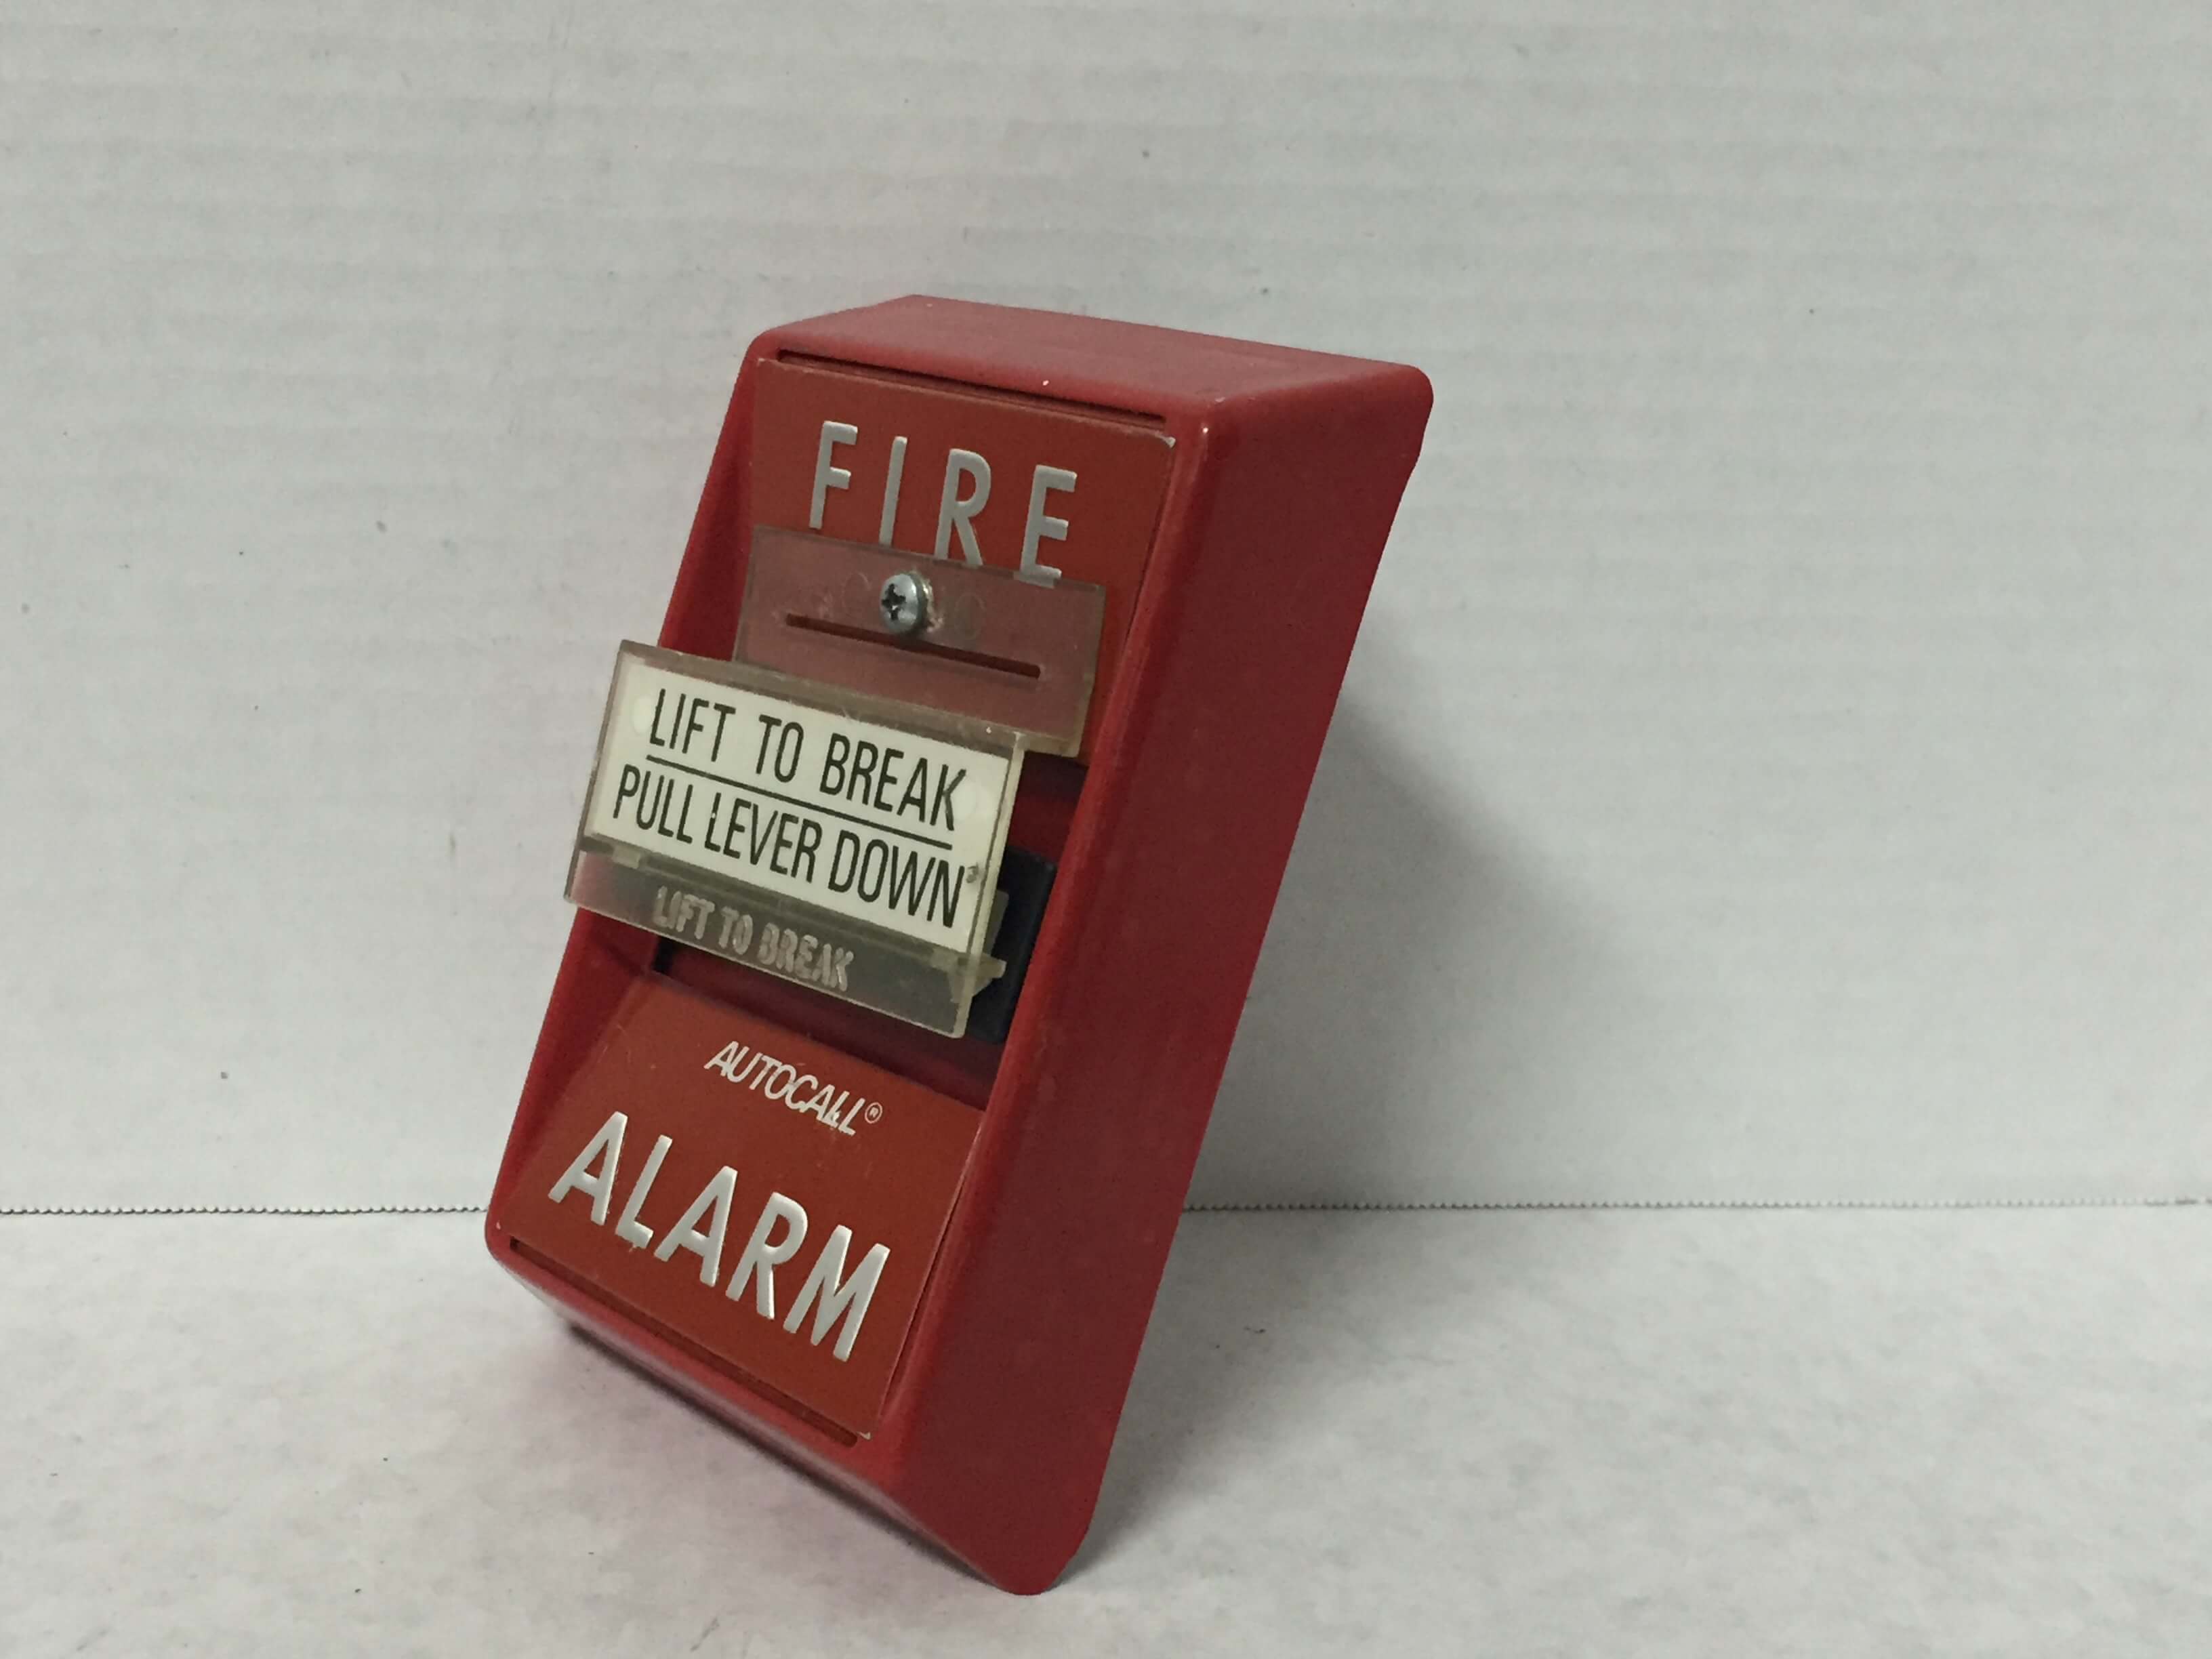 Autocall Fire Alarm